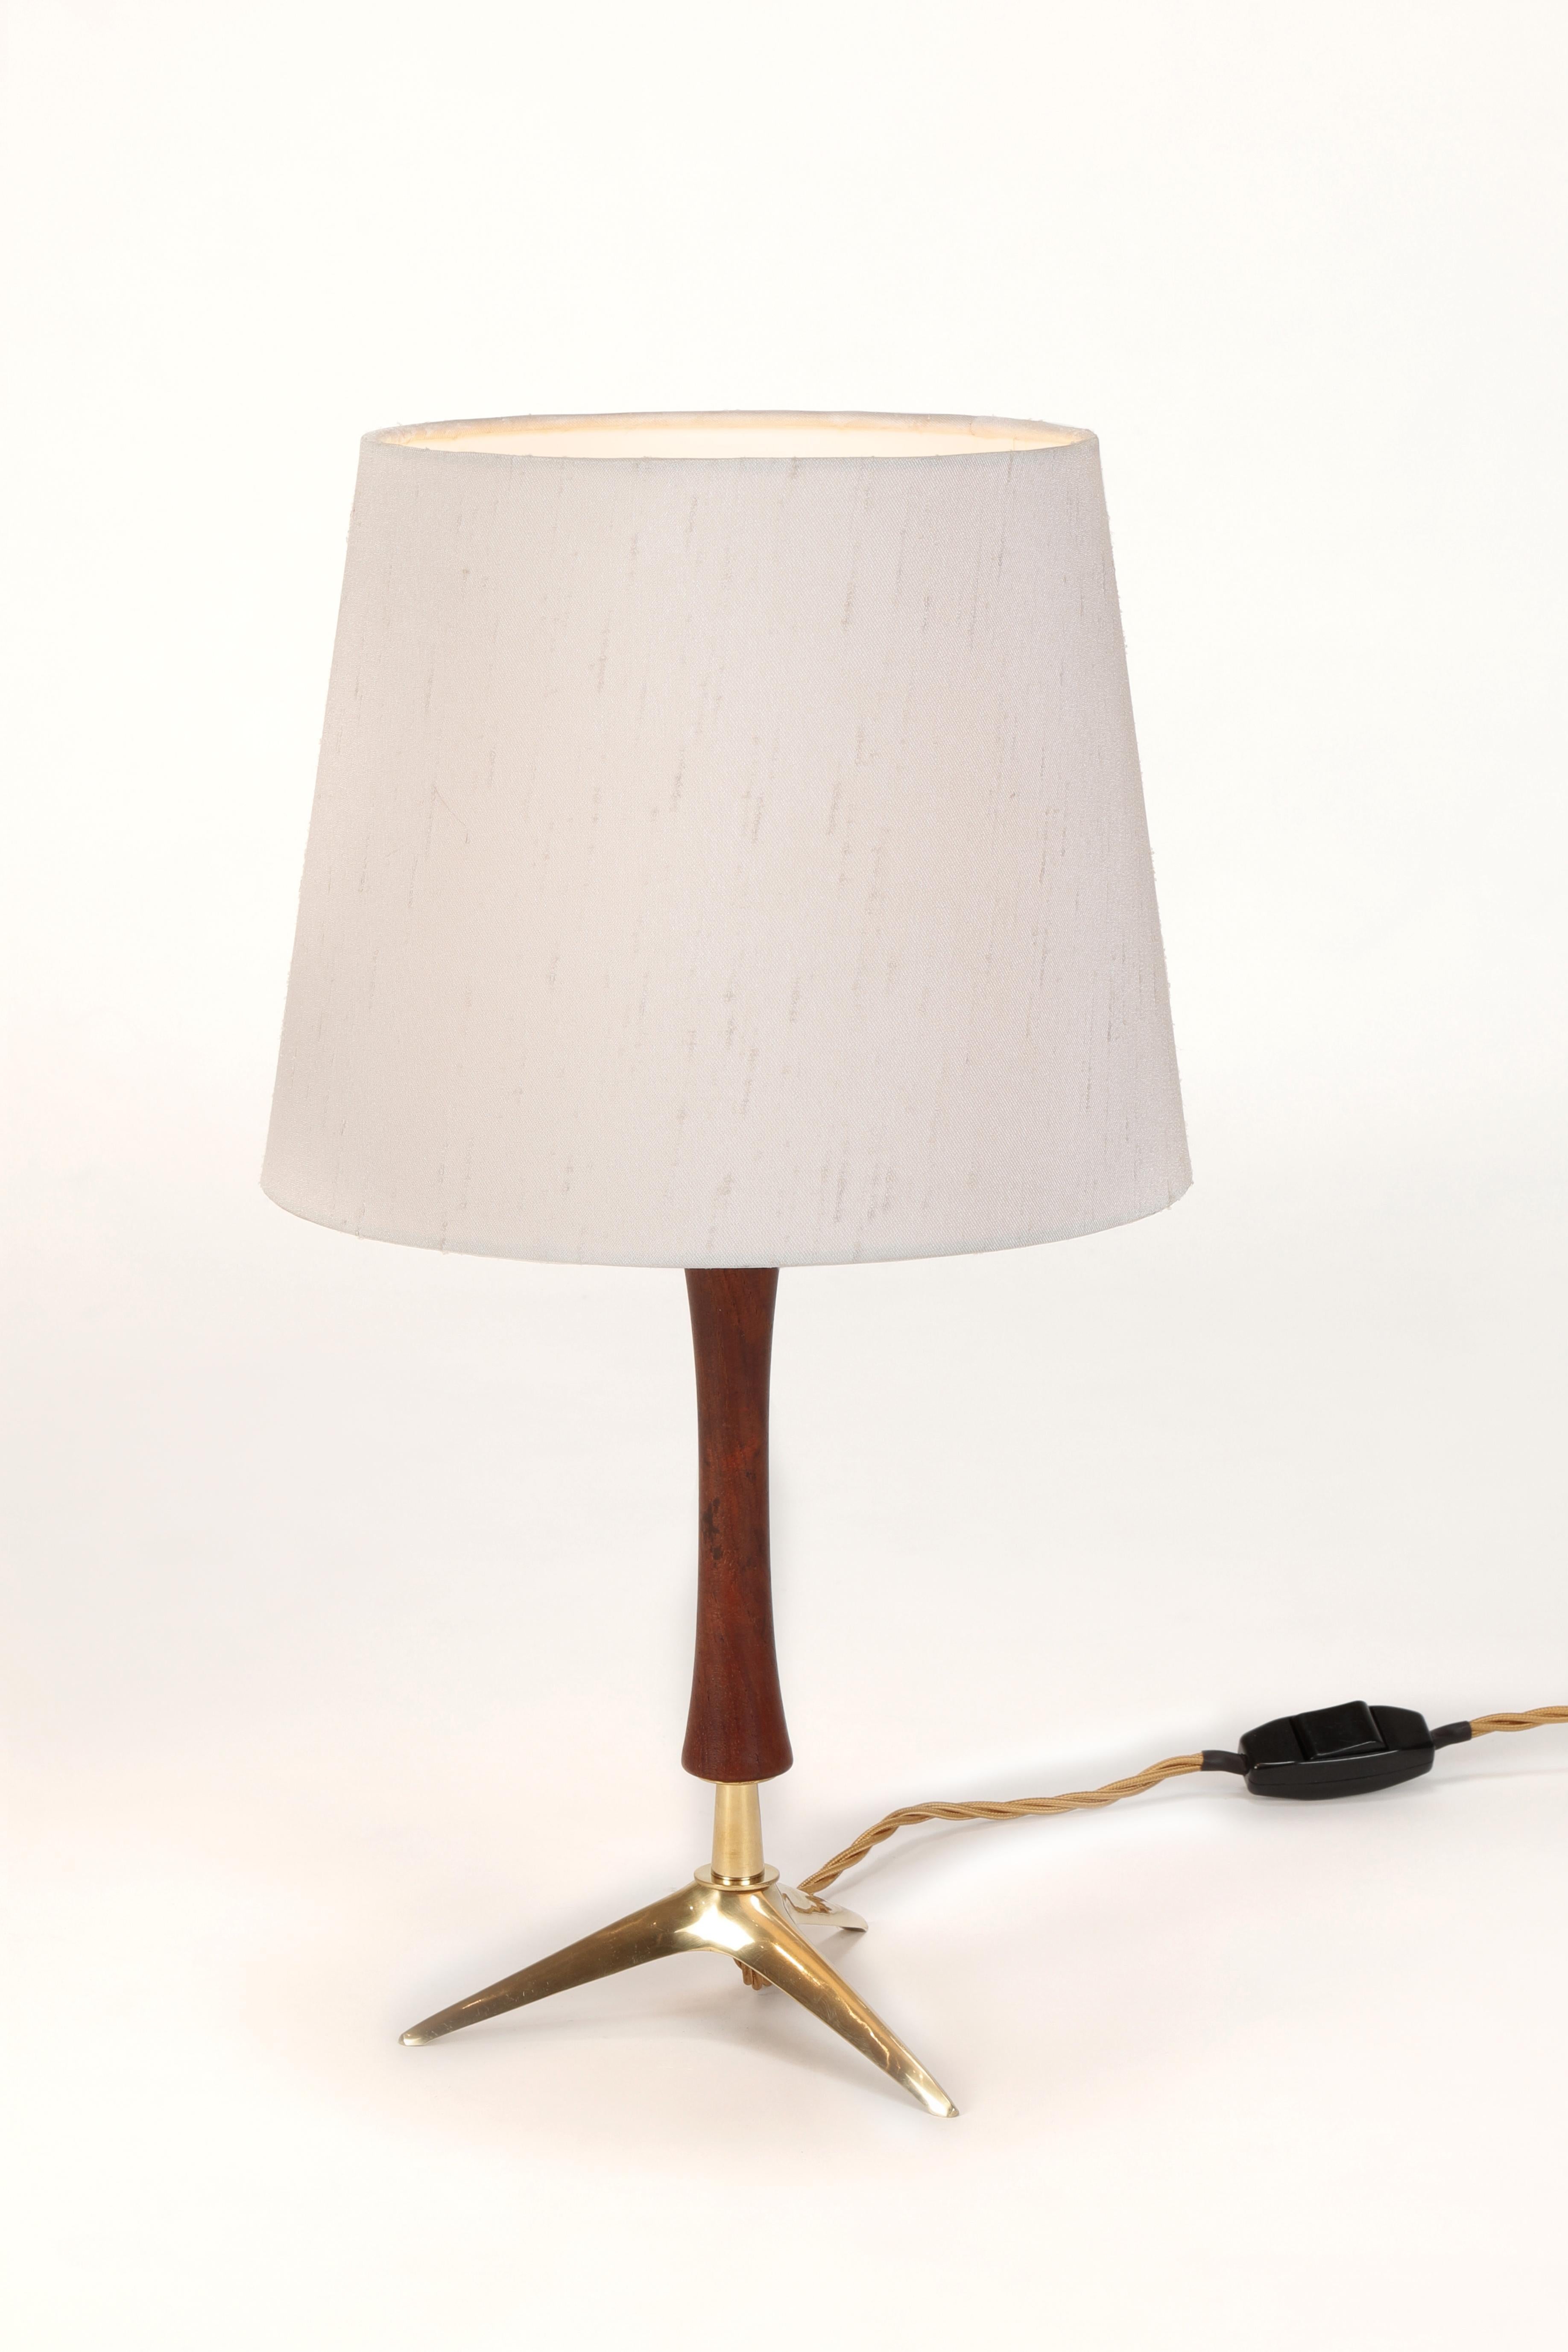 Austrian Attr. J.T. Kalmar Table Lamp Kalmar Lightning, 1950s For Sale